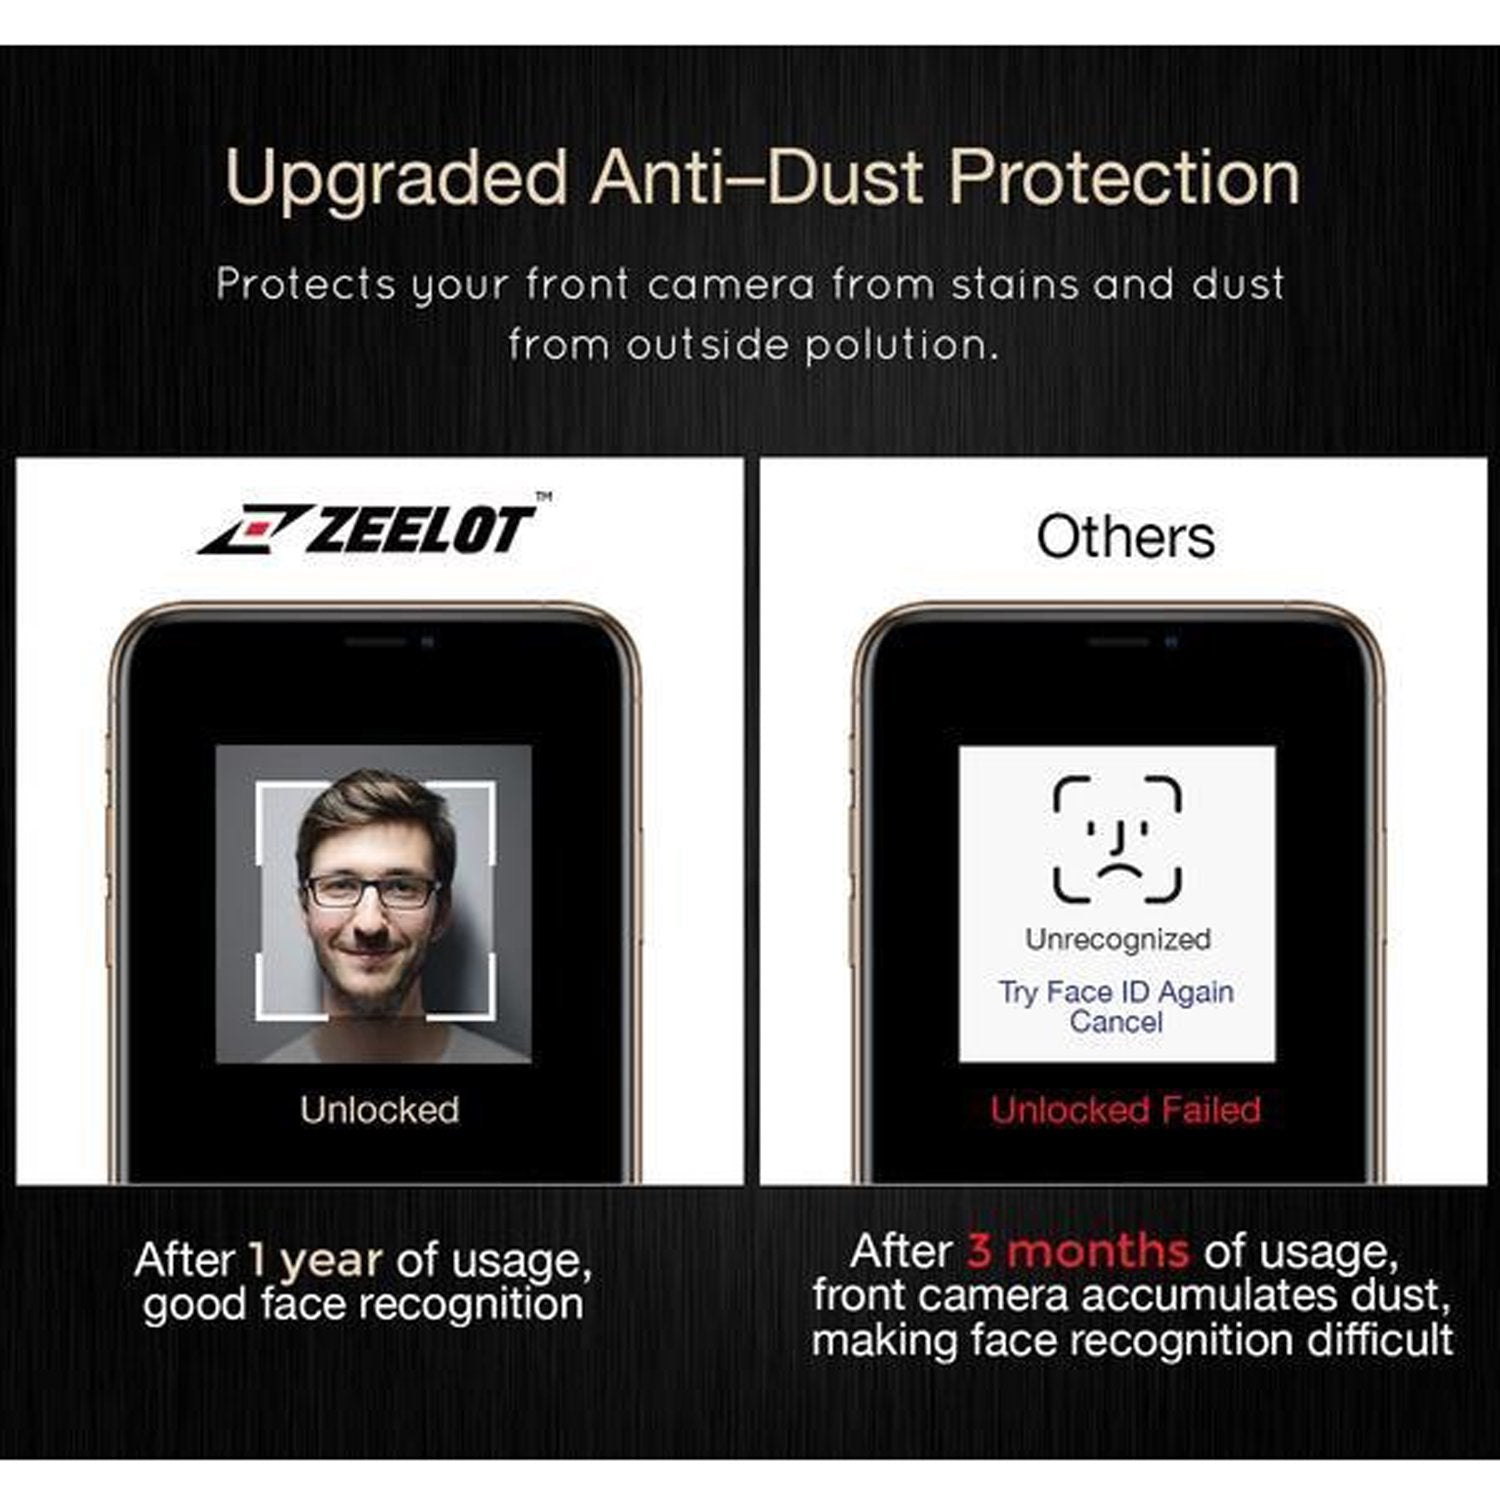 ZEELOT Galaxy Tab S7 / S7 Plus PureShield 2.5D Clear Tempered Glass